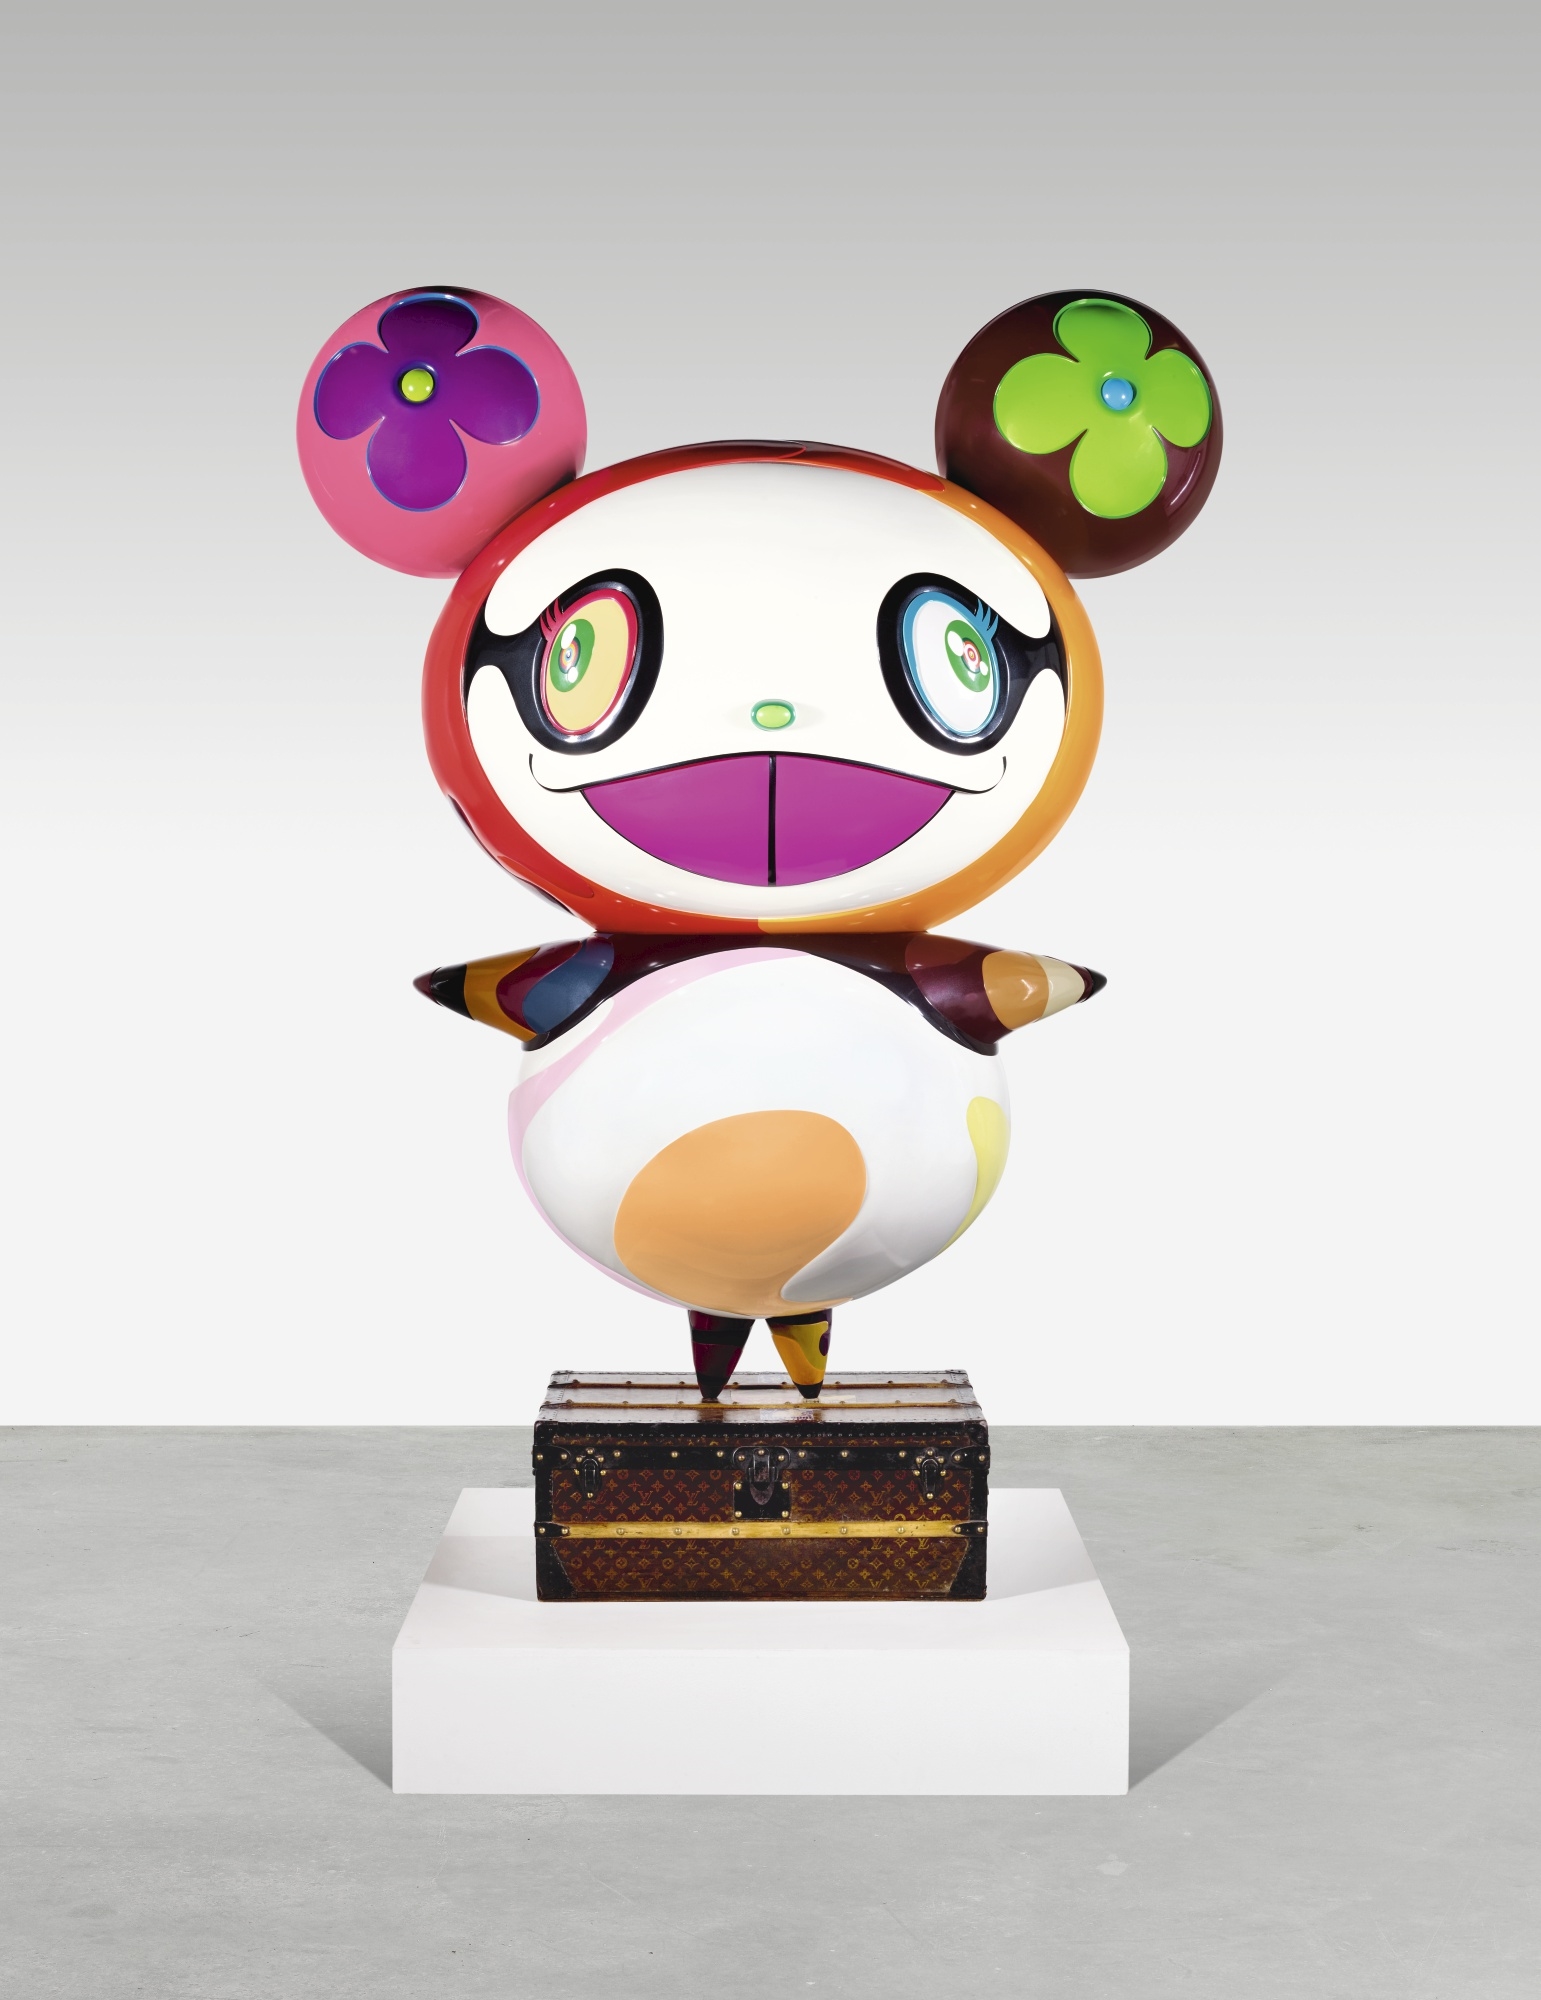 PANDA by Takashi Murakami, Executed in 2003